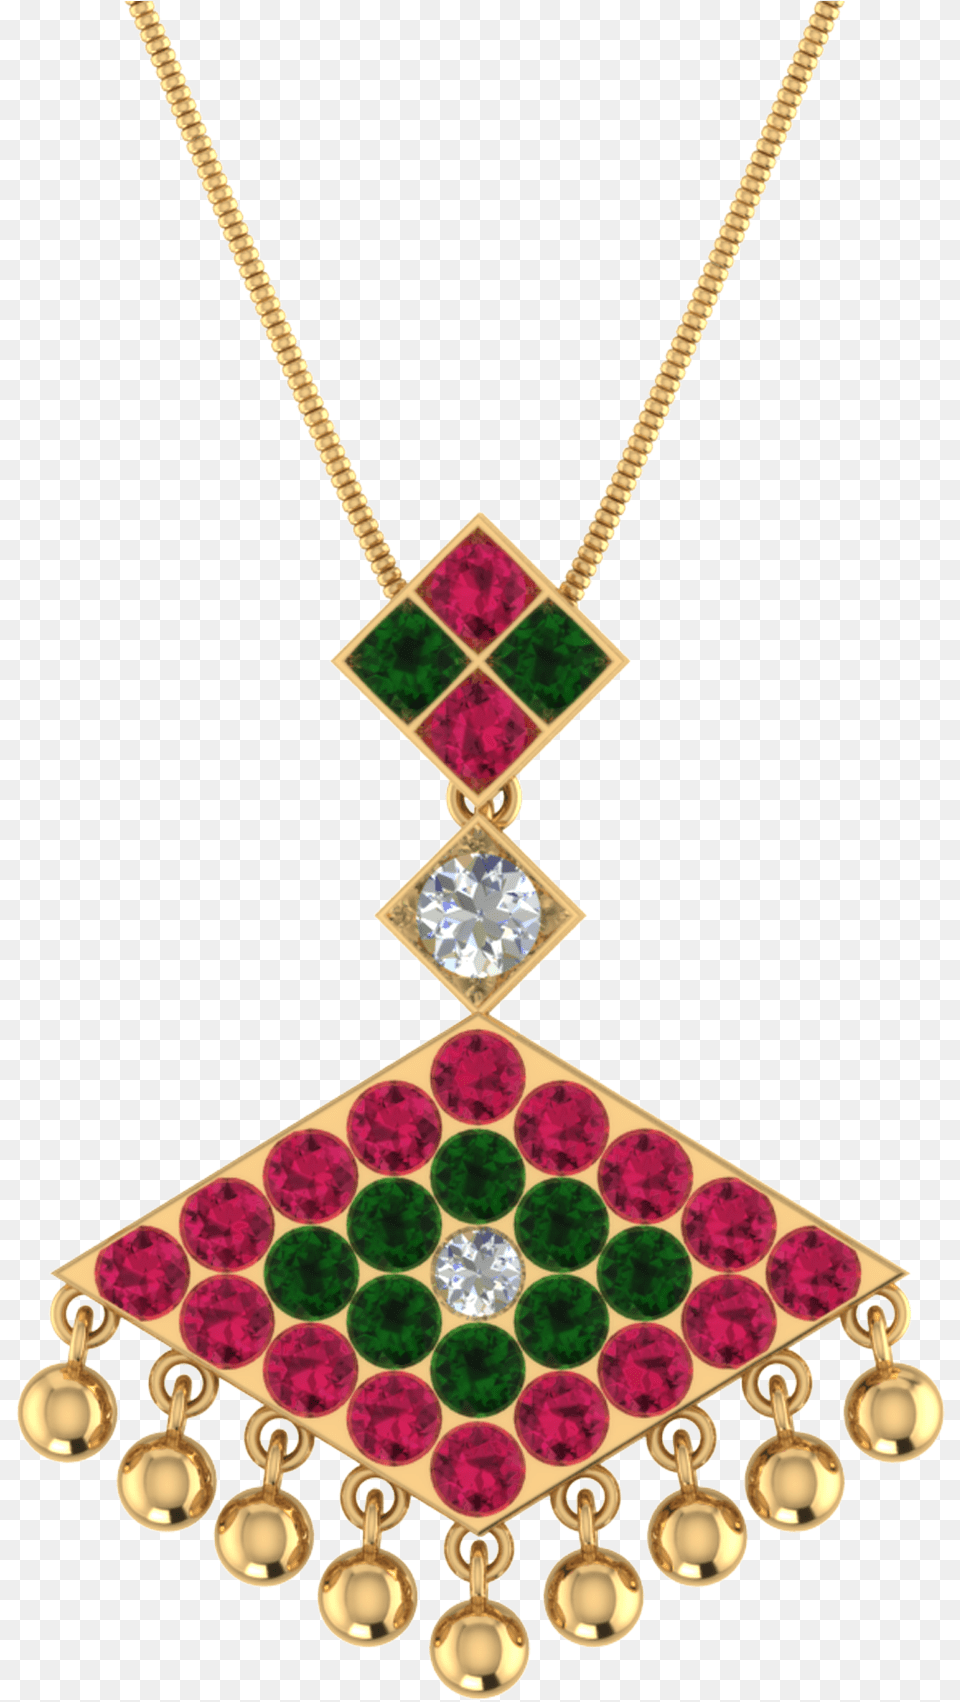 Diamond Shape, Accessories, Jewelry, Necklace, Pendant Png Image